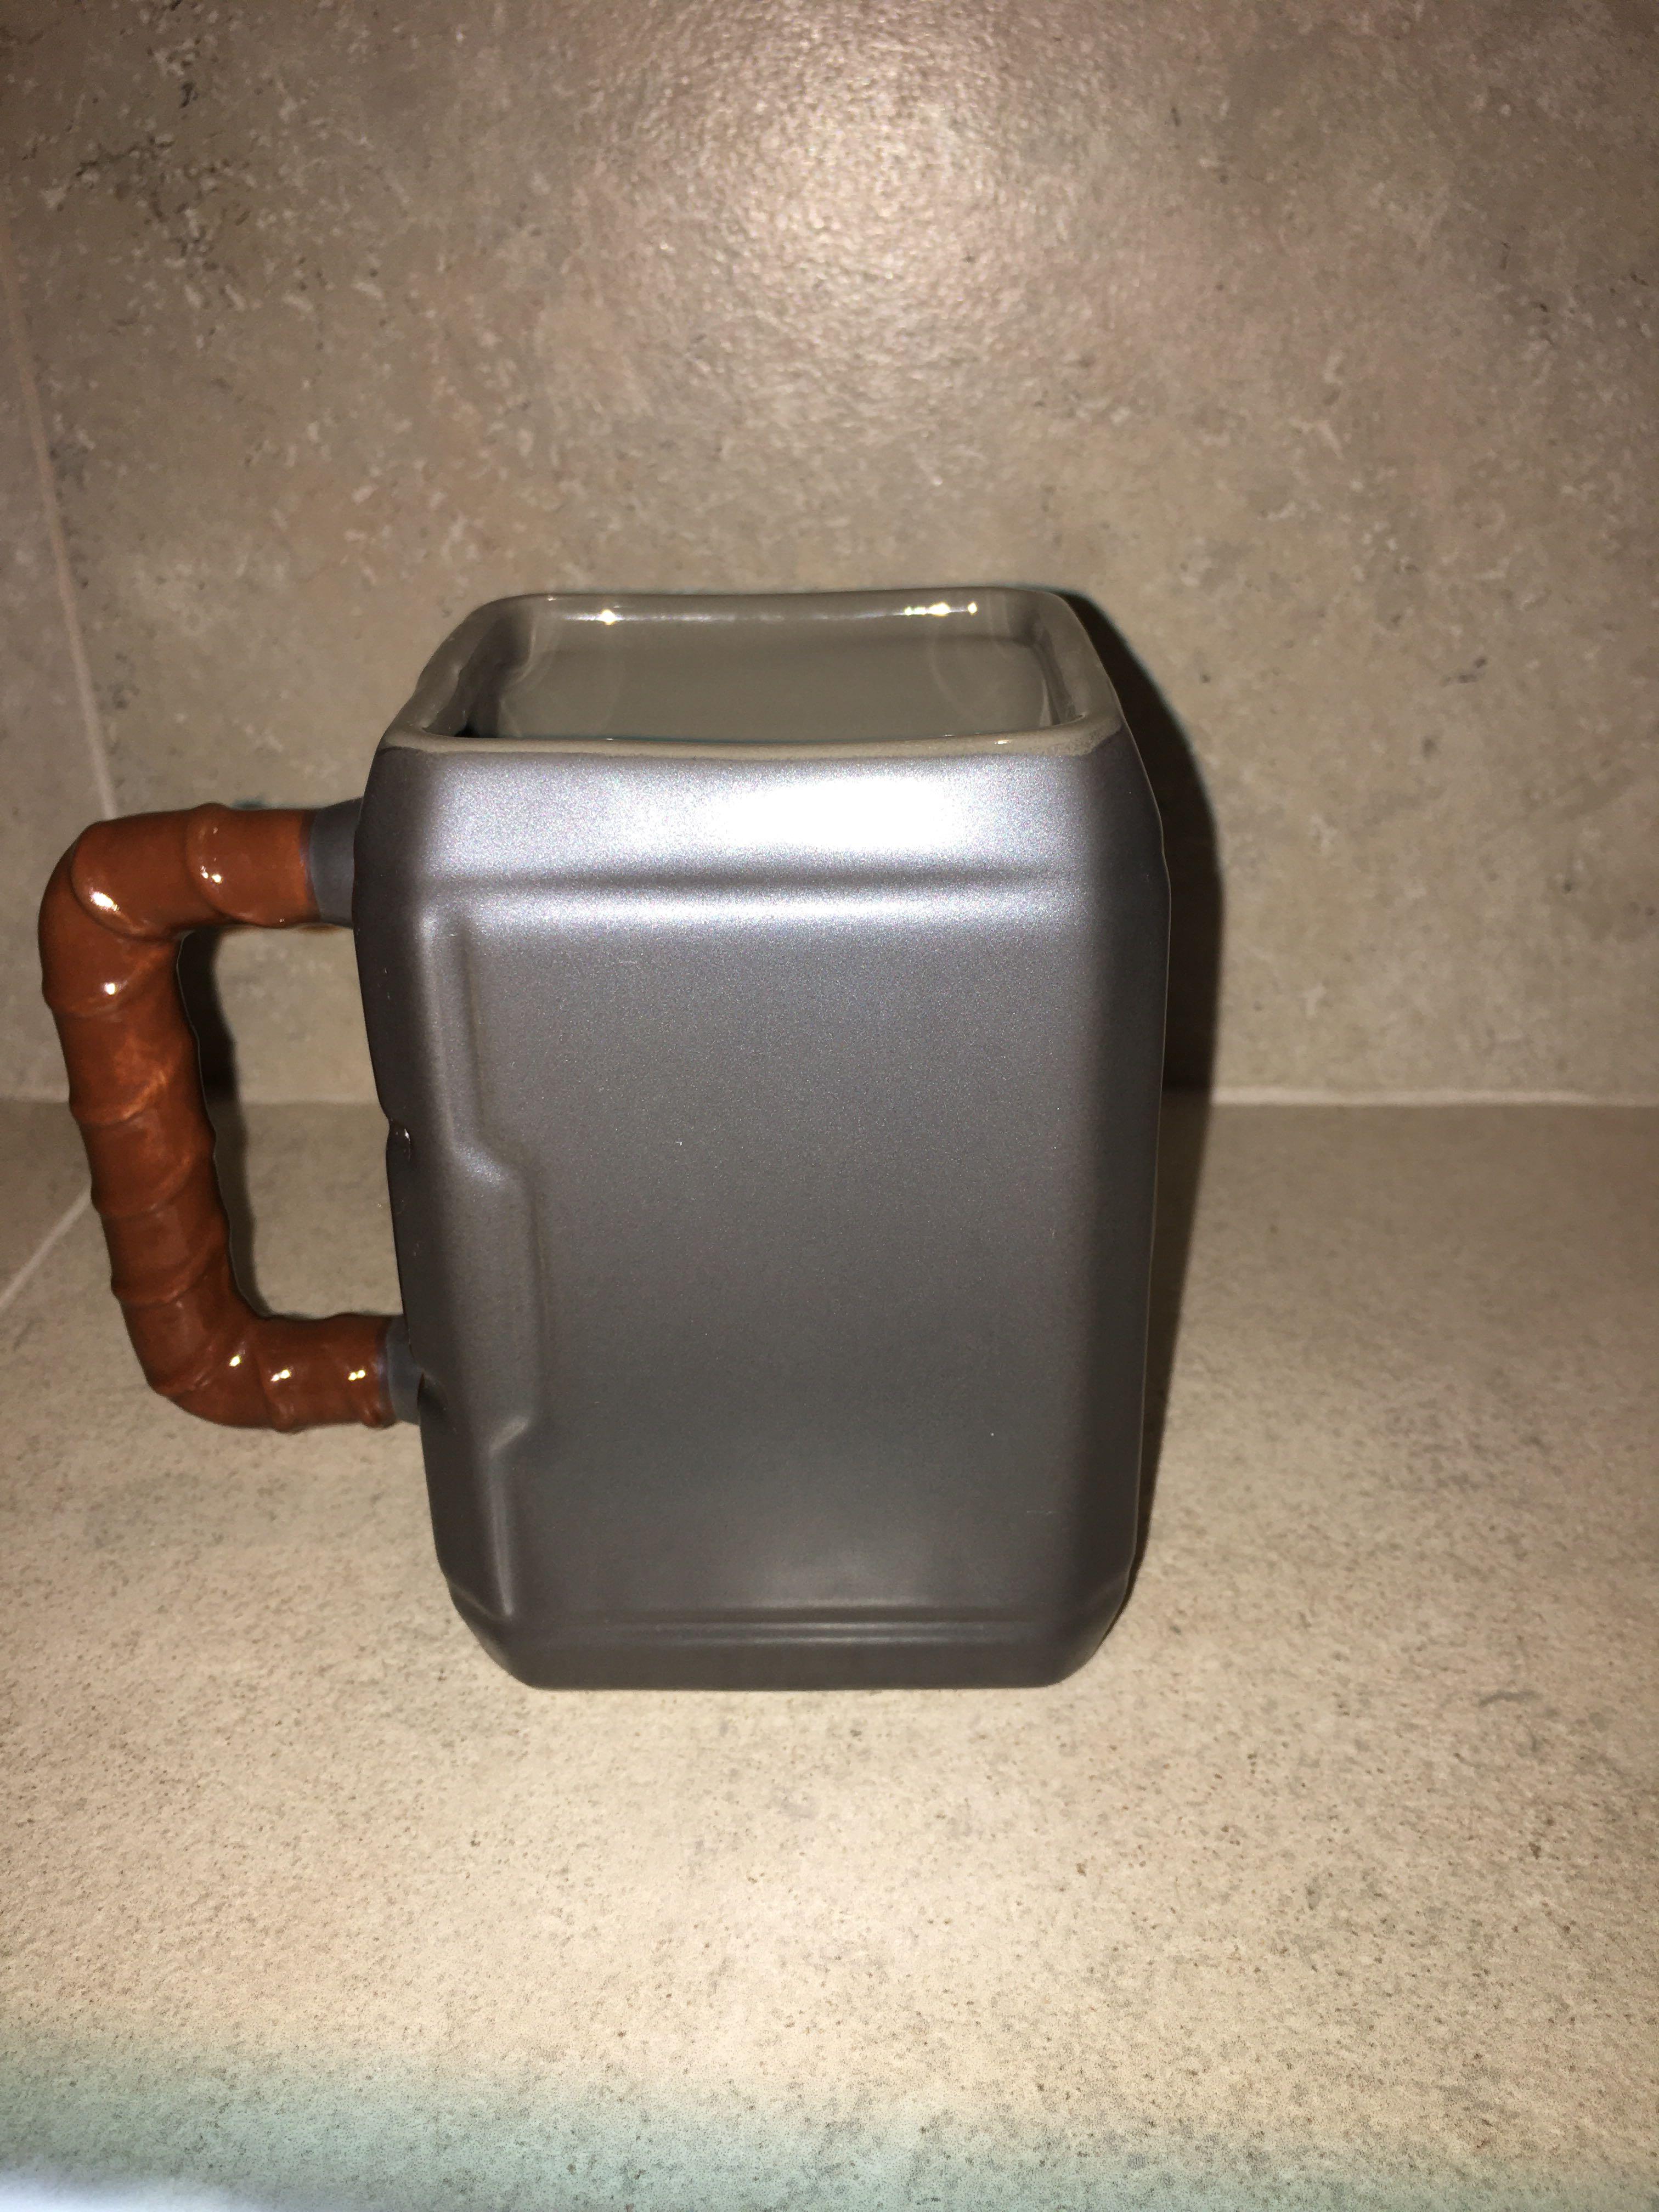 Disney Store Thor's Hammer Sculptured Mug New with Box